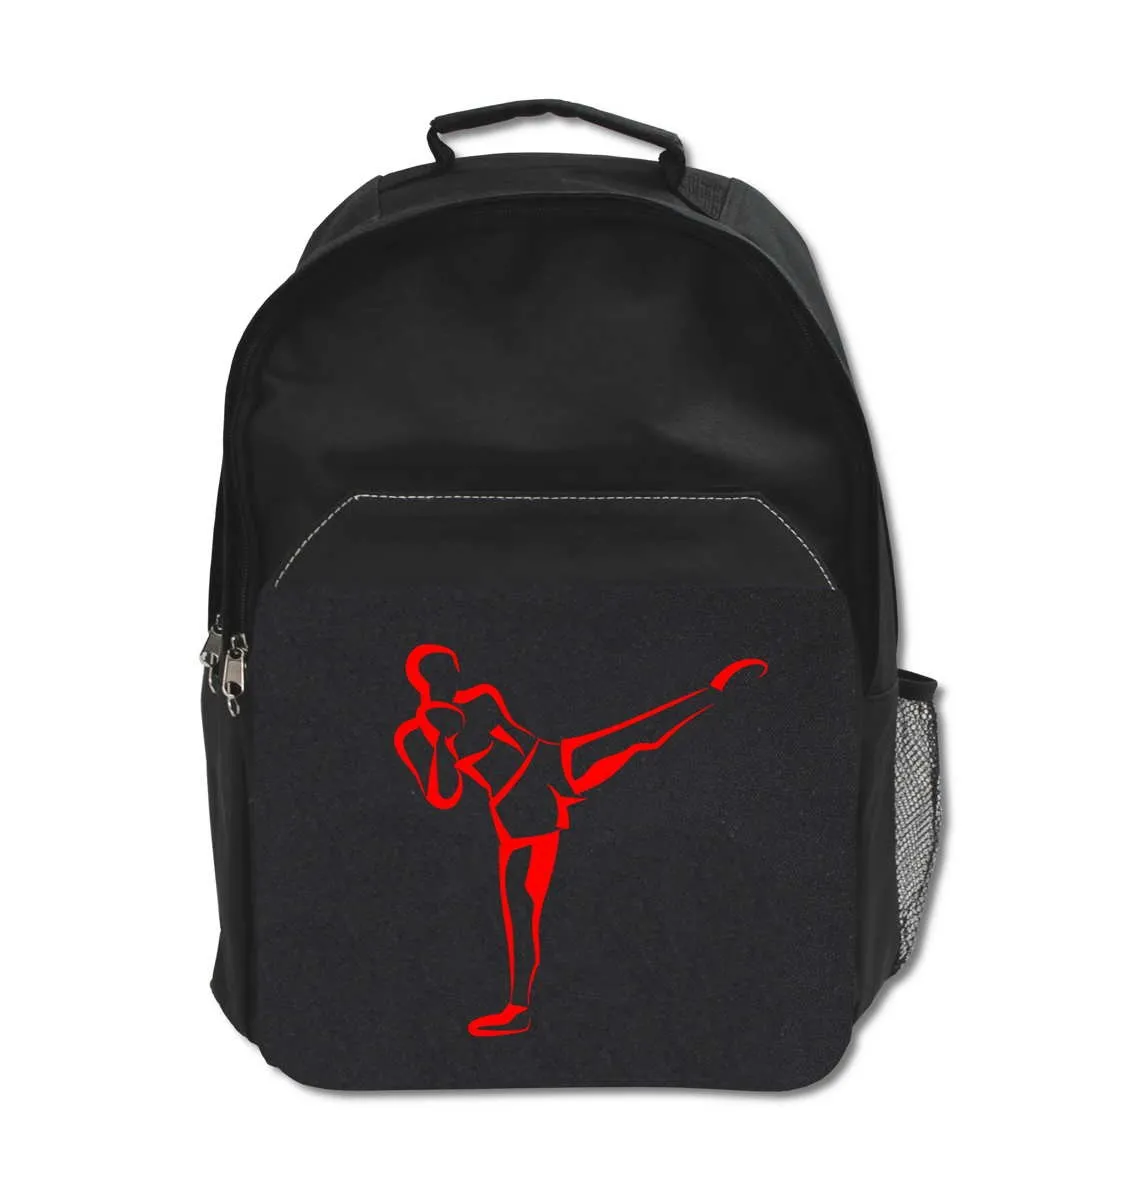 Kickboxing backpack